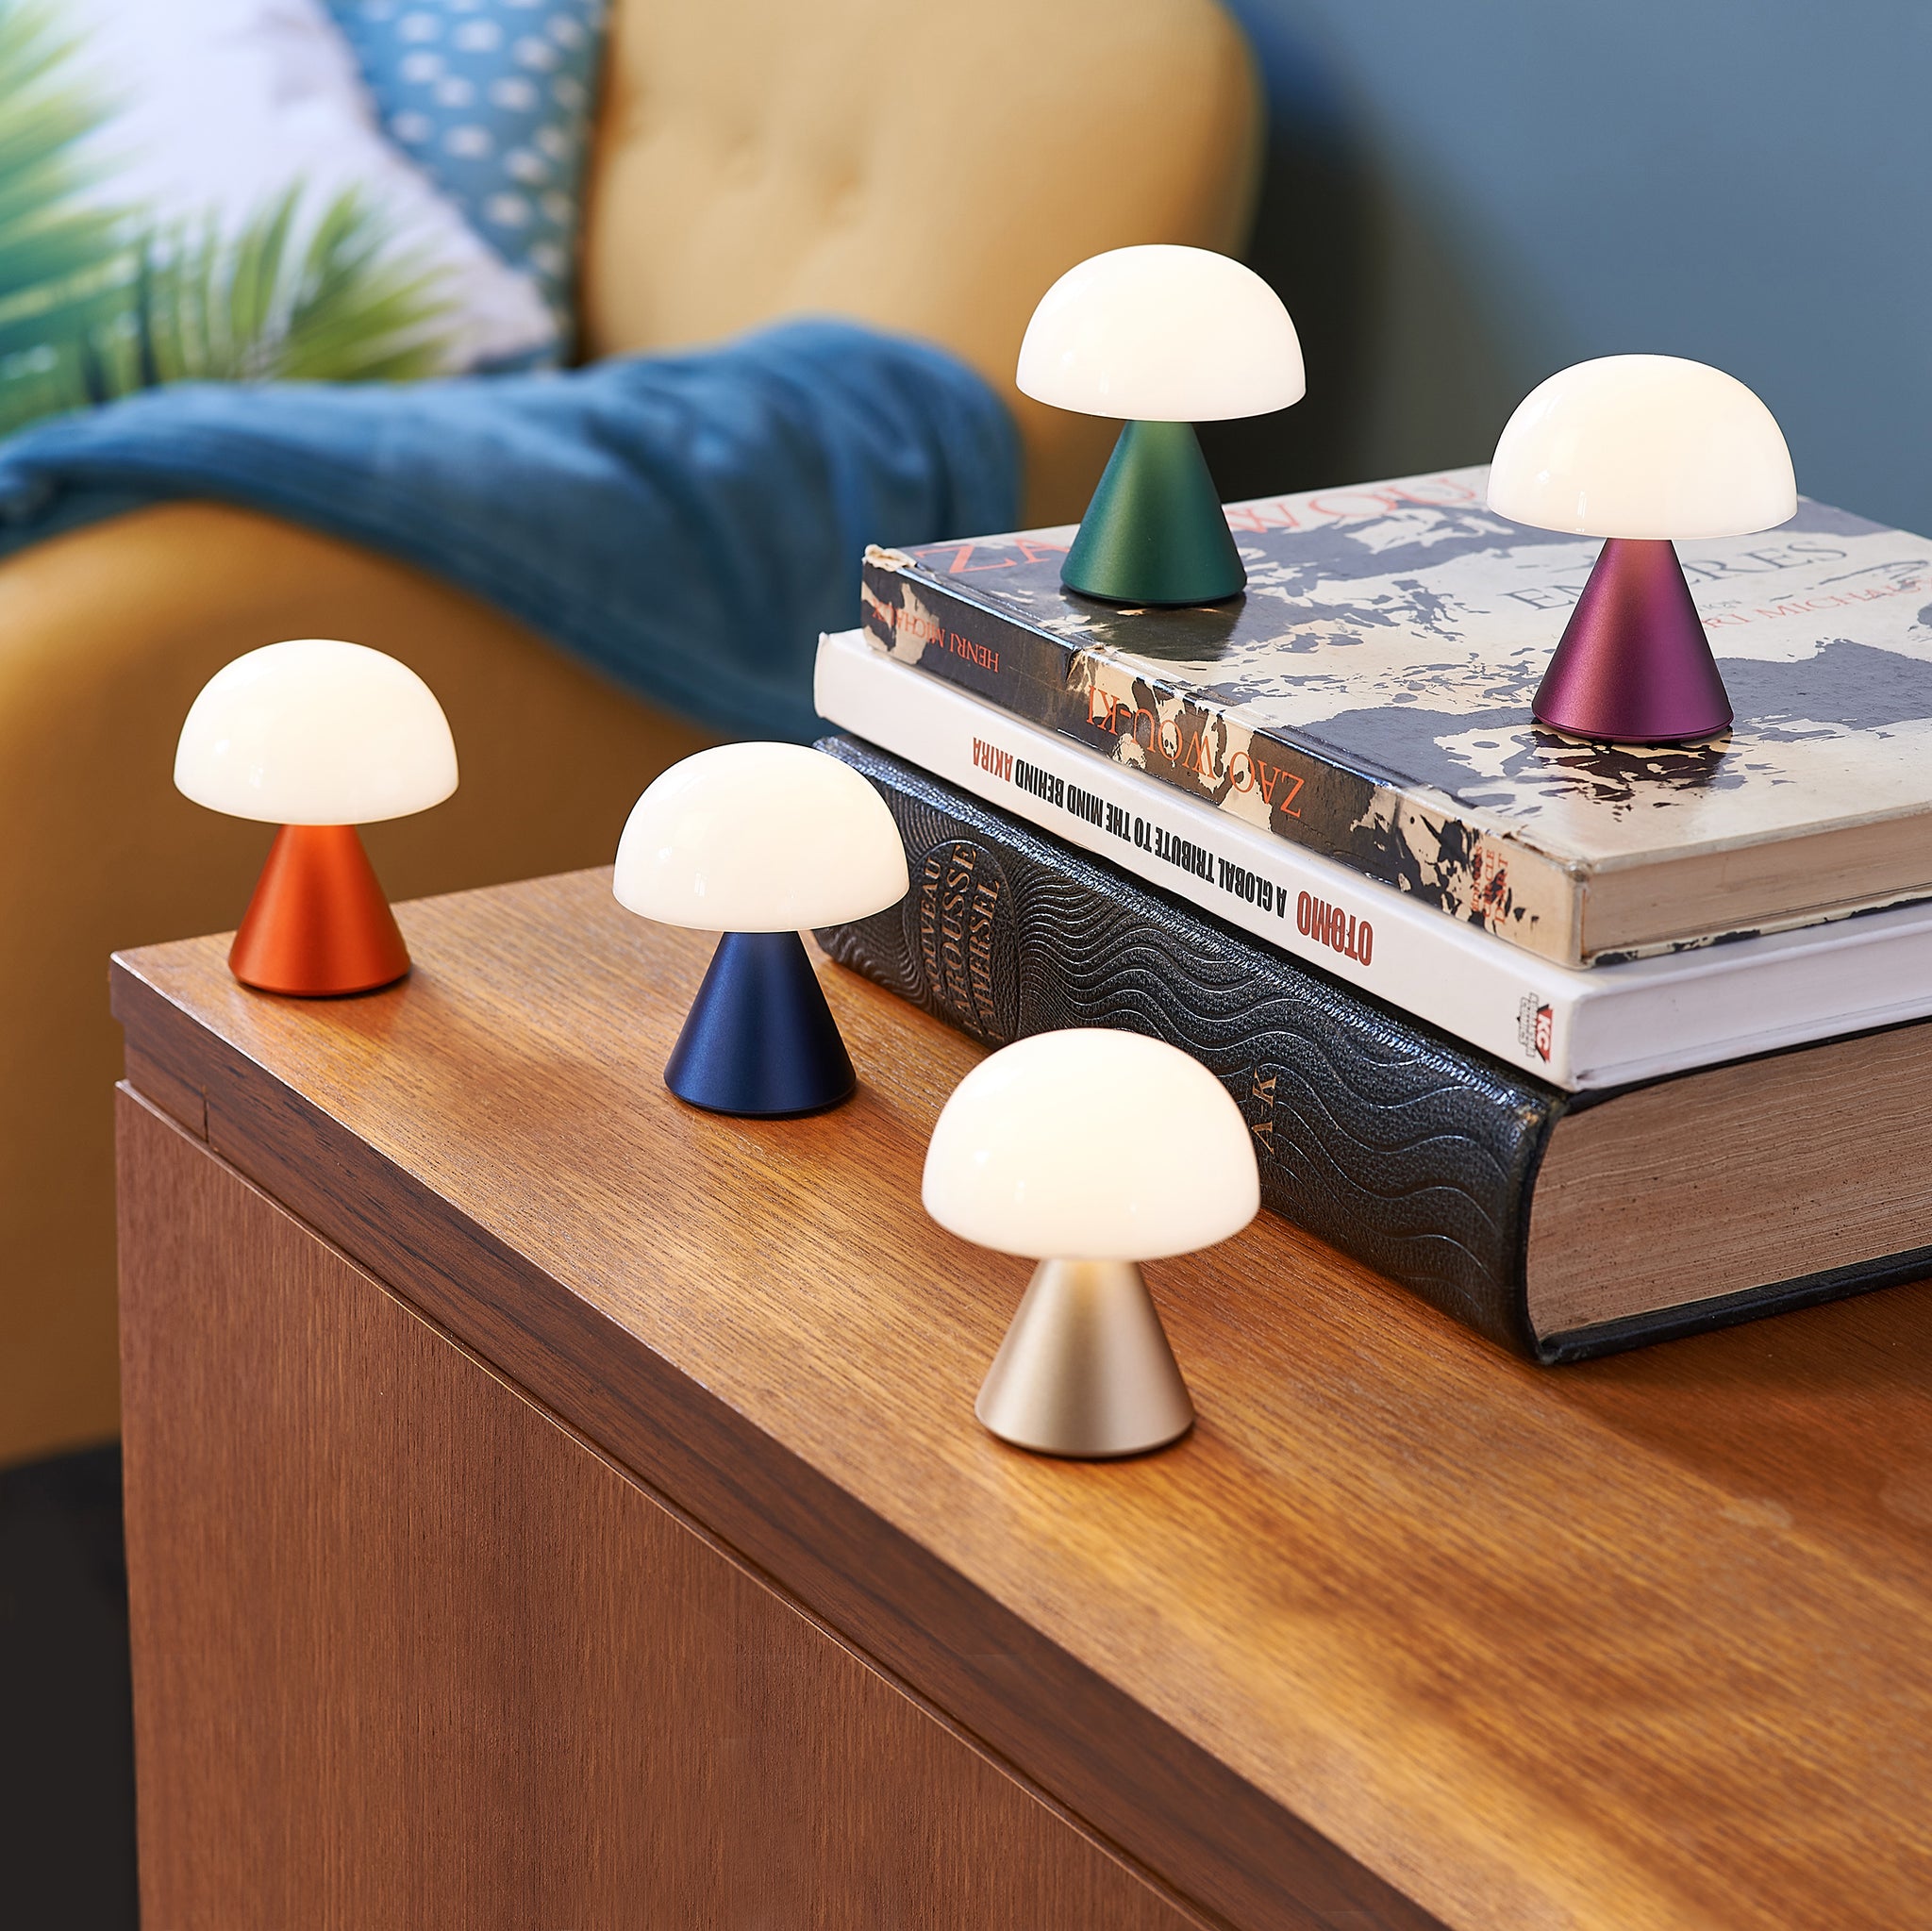 Lexon Mina Small Oranje│Oplaadbare LED-Lamp│art. LH60O1│diverse kleuren op houten tafeltje en boeken